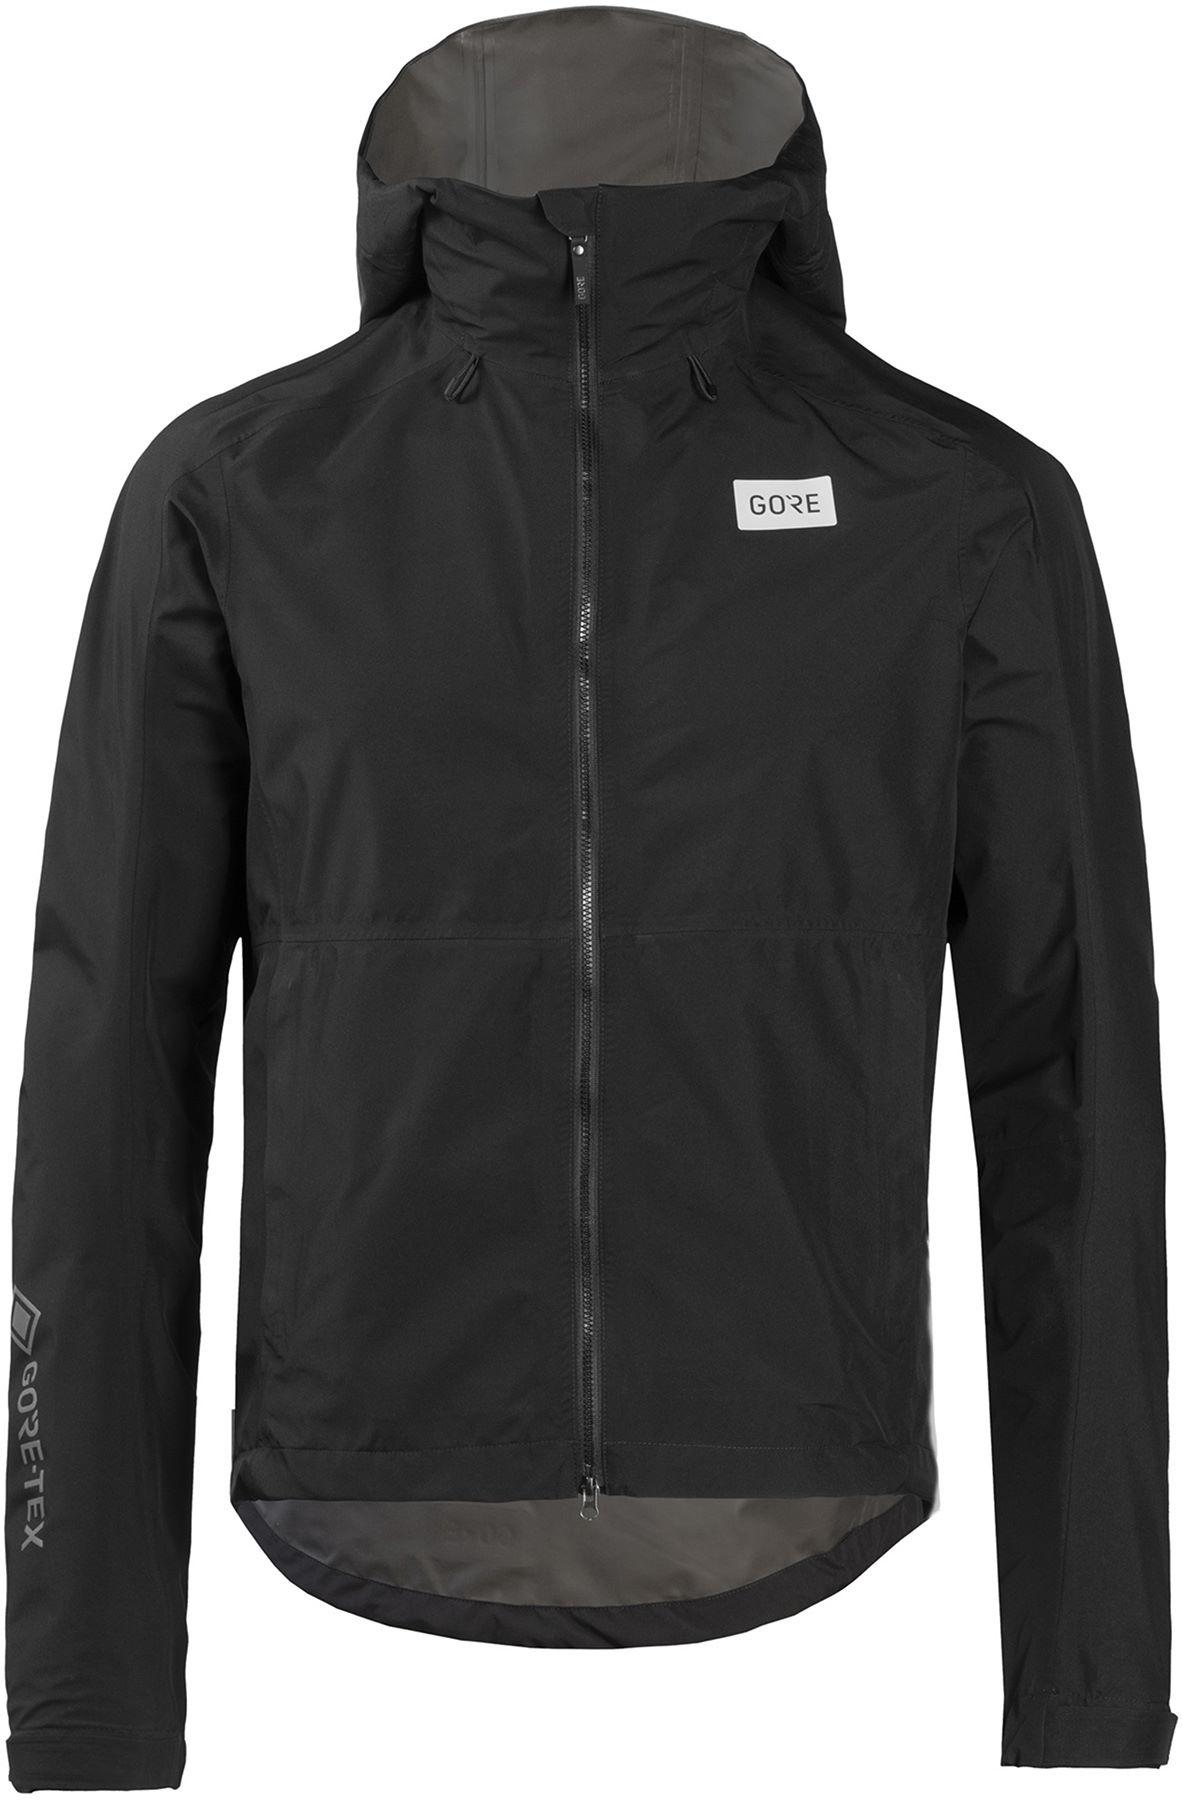 Gorewear Endure Jacket - Black